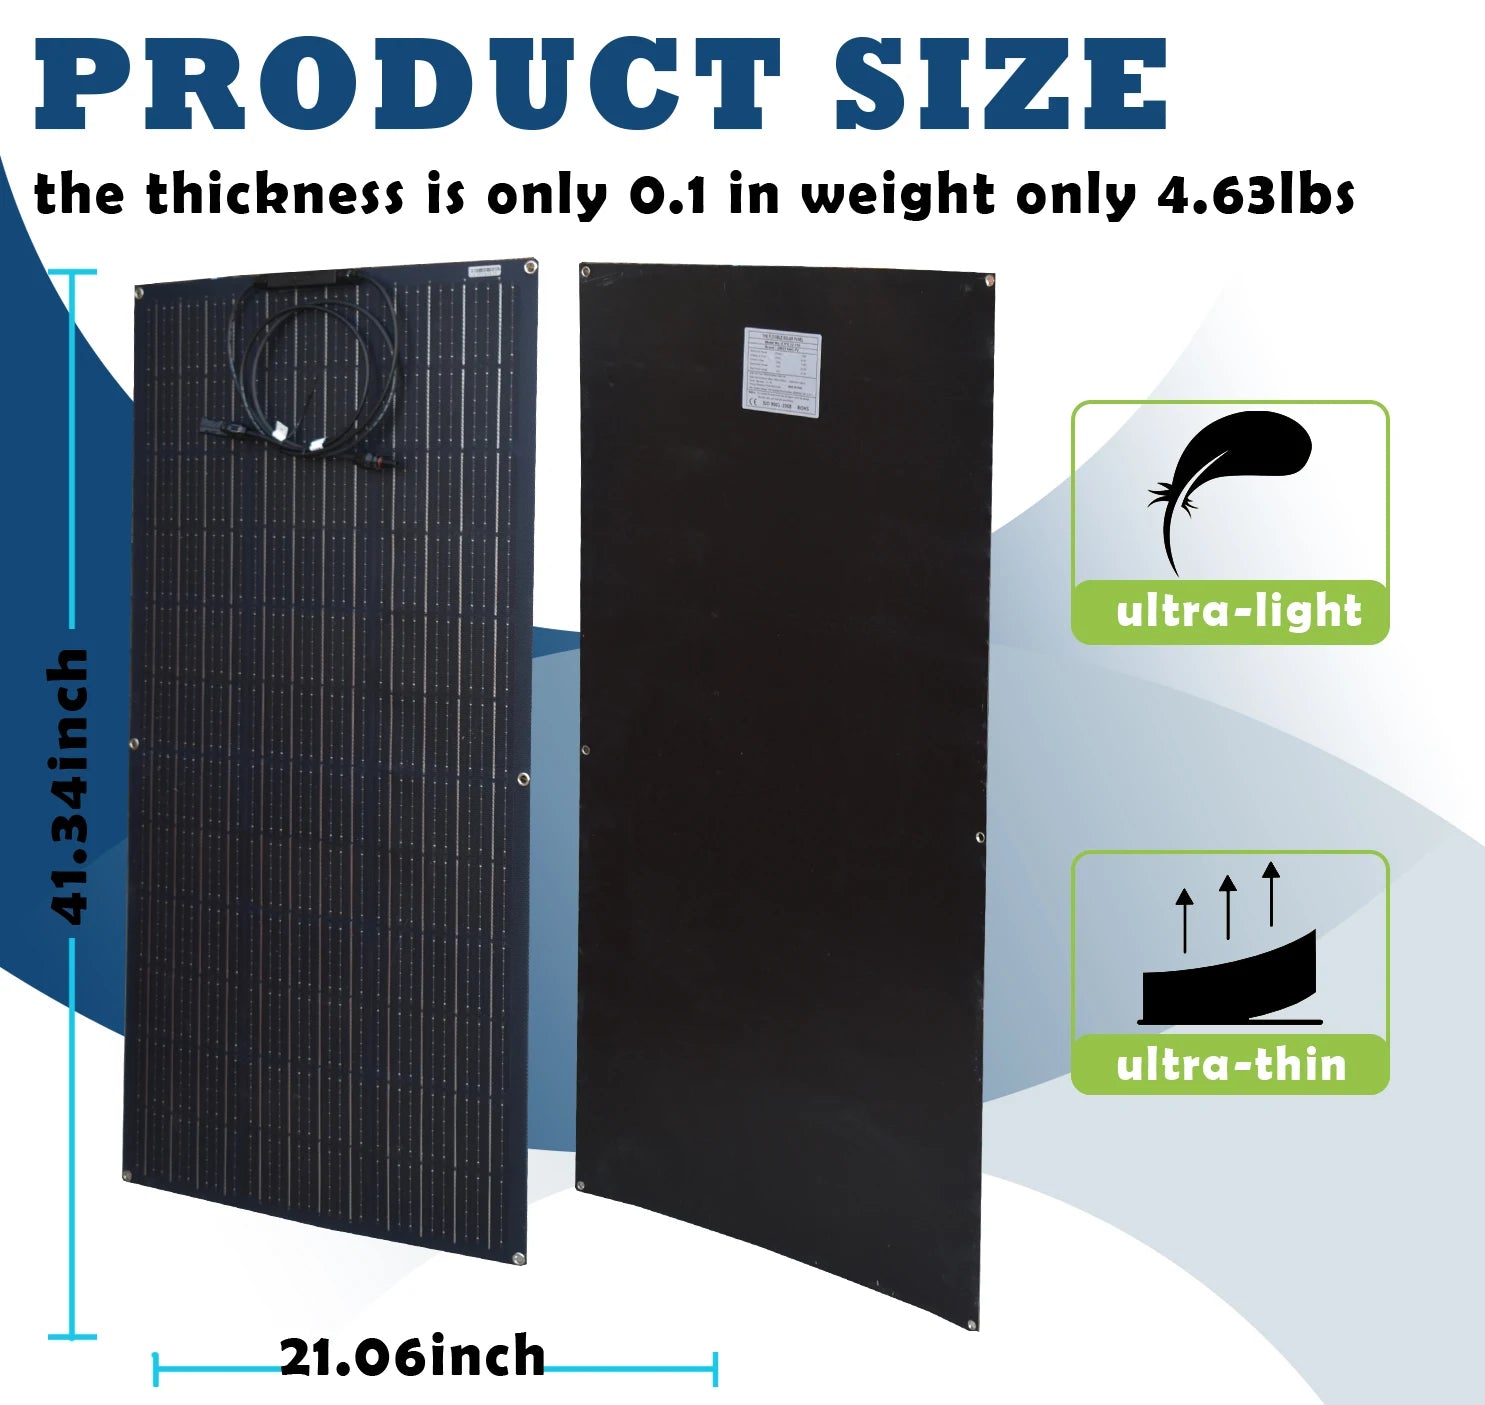 JINGYANG long lasting Semi Flexible solar panel, Compact solar panel: 21.06 inches long, 4.63 lbs, 0.1 inch thick.